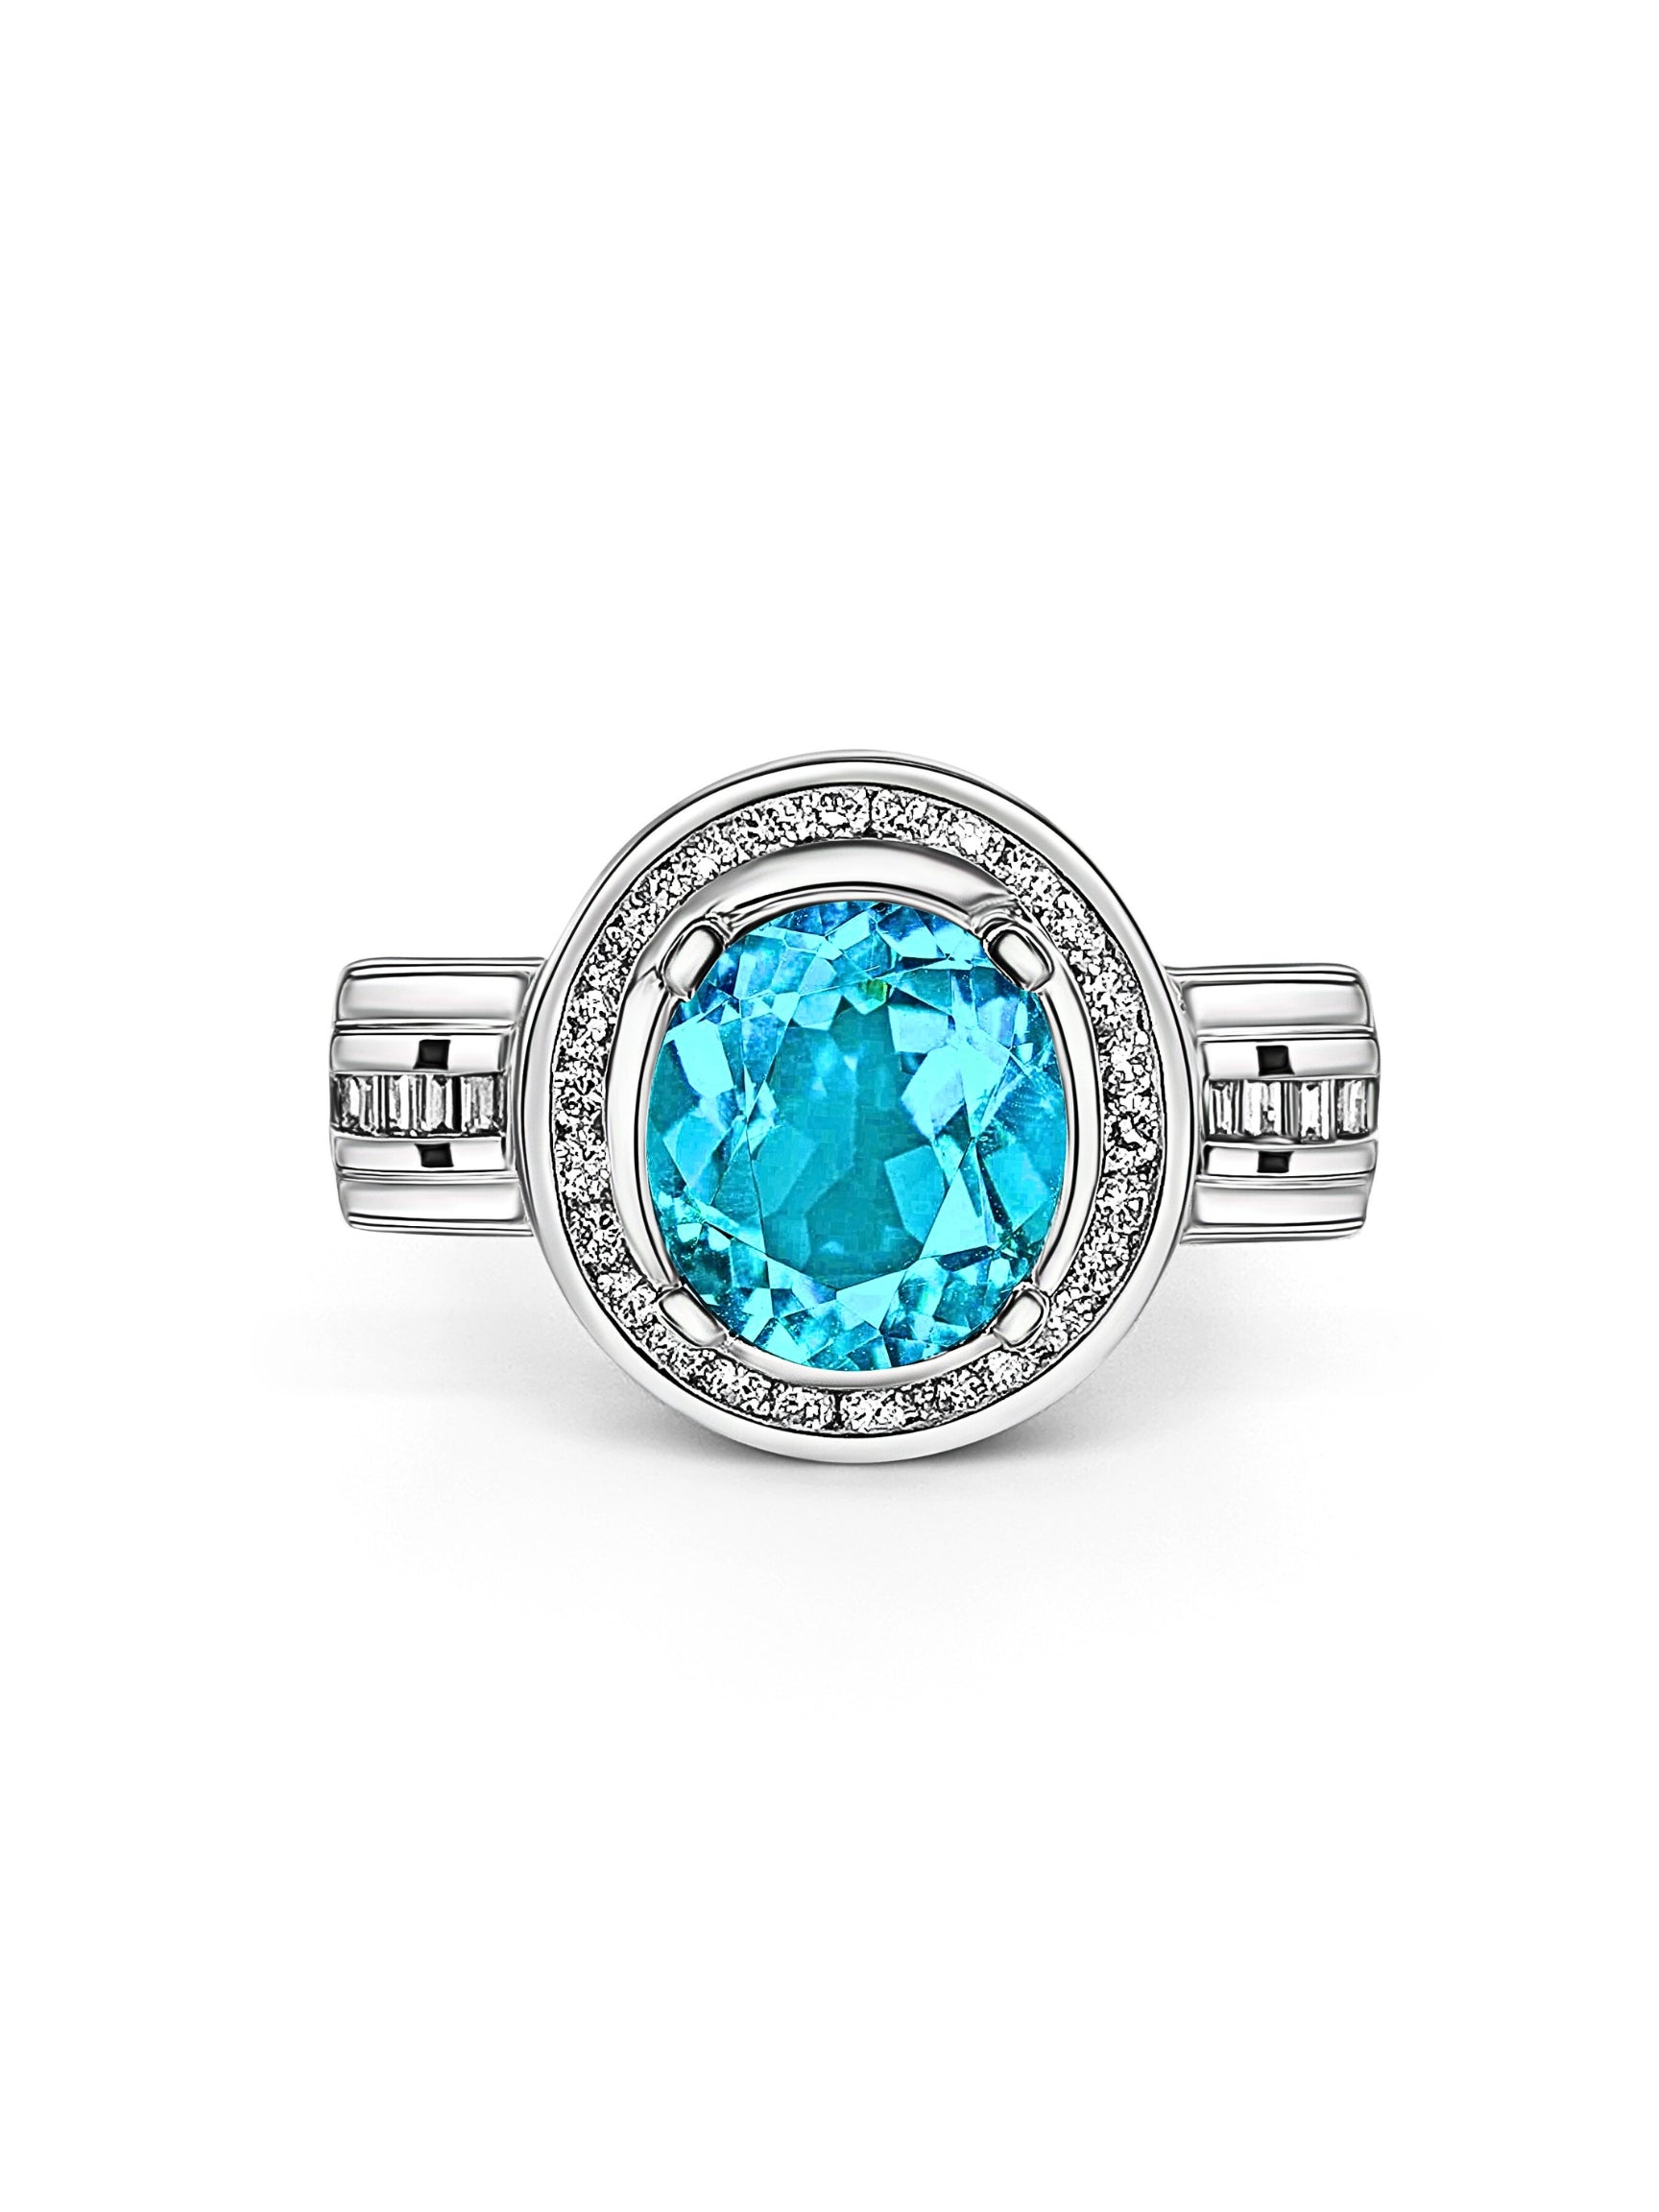 Vintage-Retro-Style-8-Carat-Oval-Cut-Blue-Zircon-with-Diamond-Halo-in-Platinum-18K-Gold-Filigree-Set-Ring-Semi-Precious-Jewelry.jpg